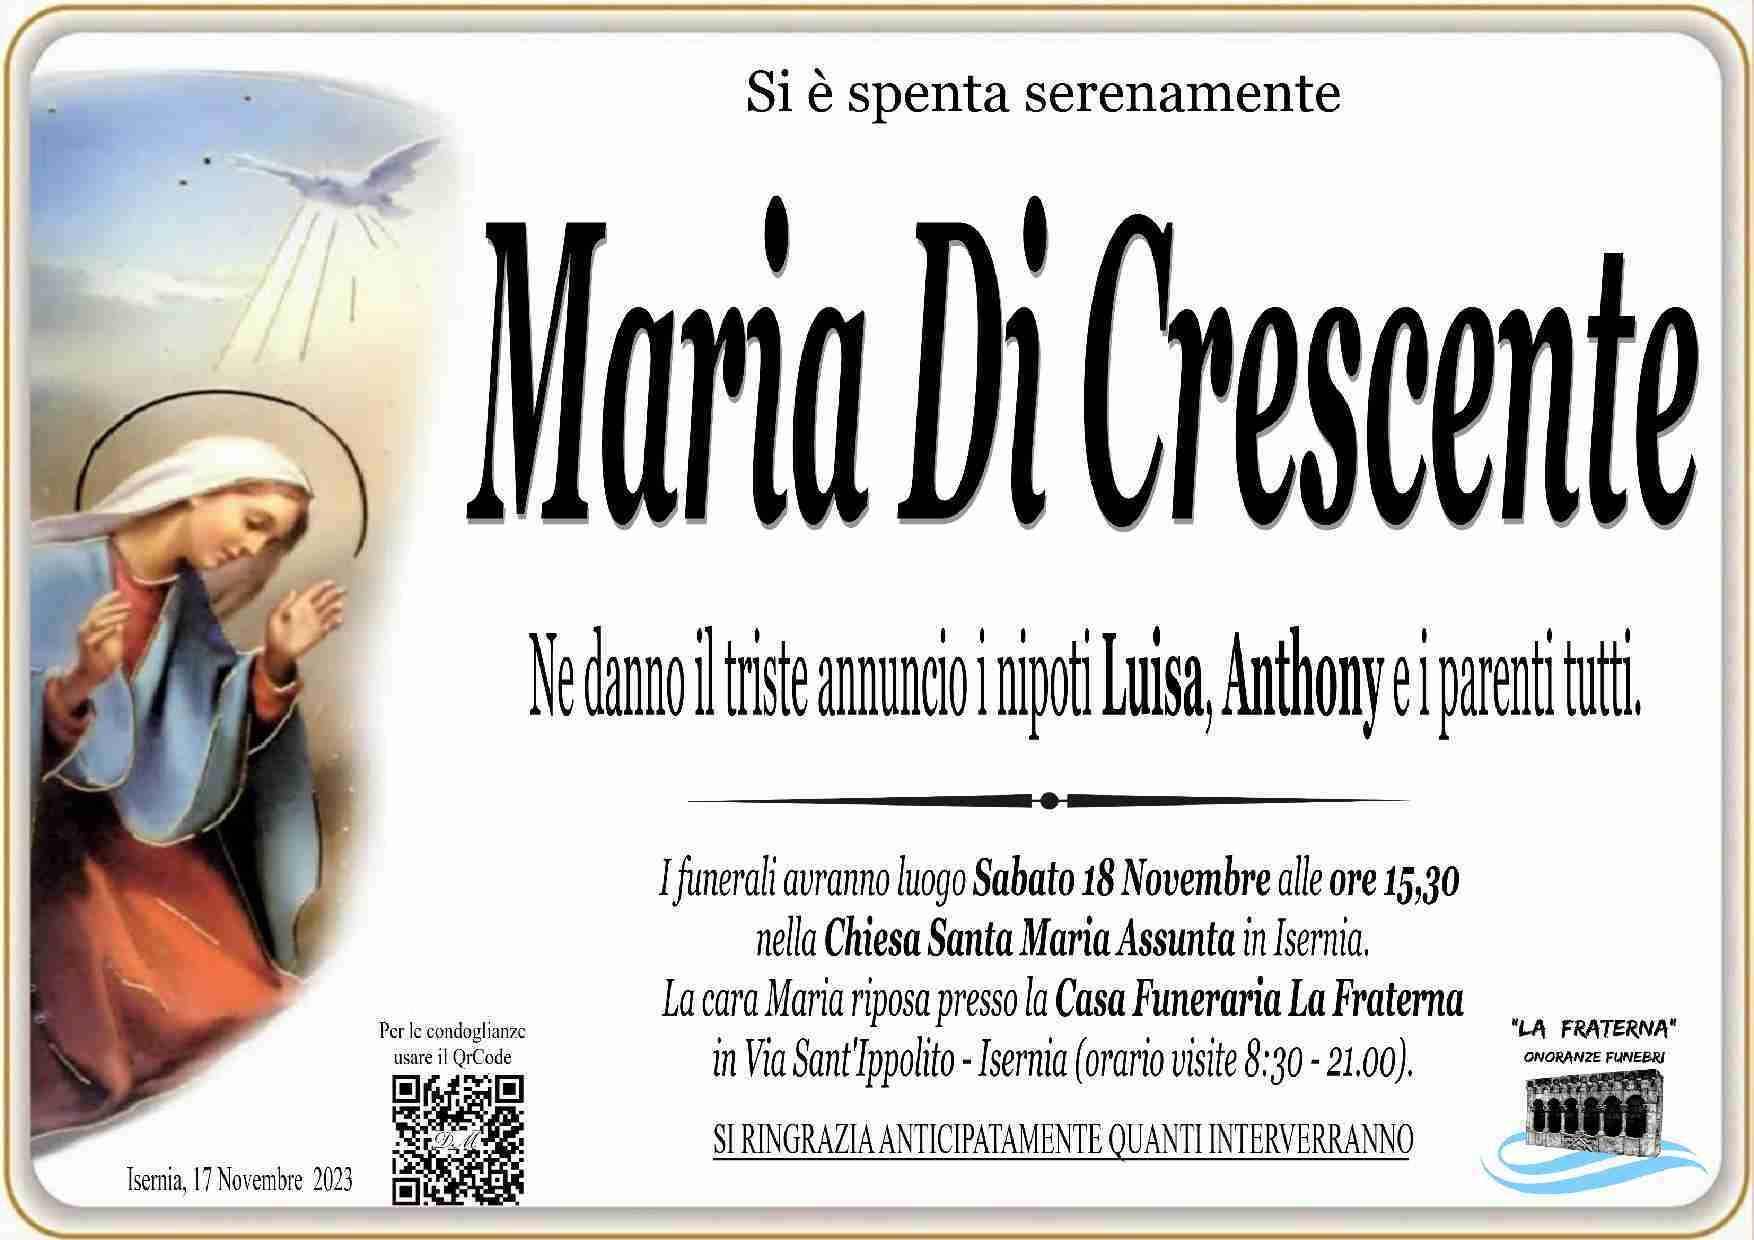 Maria Di Crescente